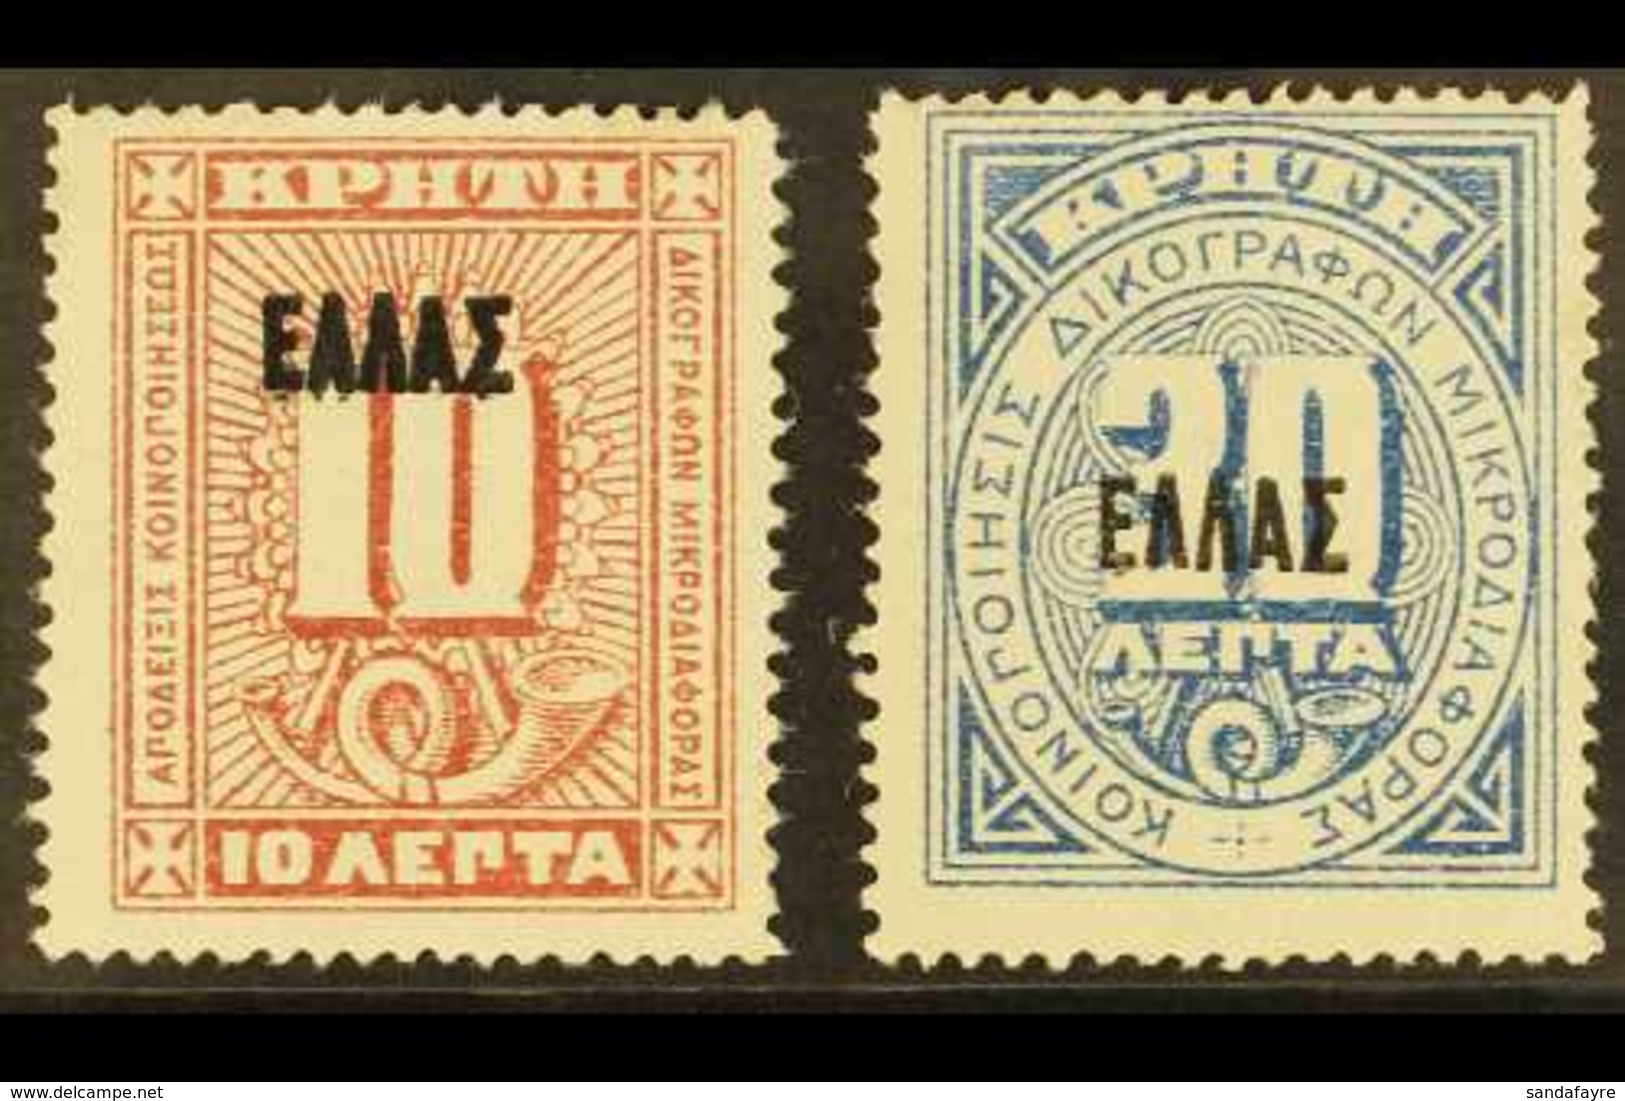 OFFICIALS  1908 Overprints Complete Set (Michel 3/4, SG O44/45), Never Hinged Mint, Fresh. (2 Stamps) For More Images, P - Autres & Non Classés